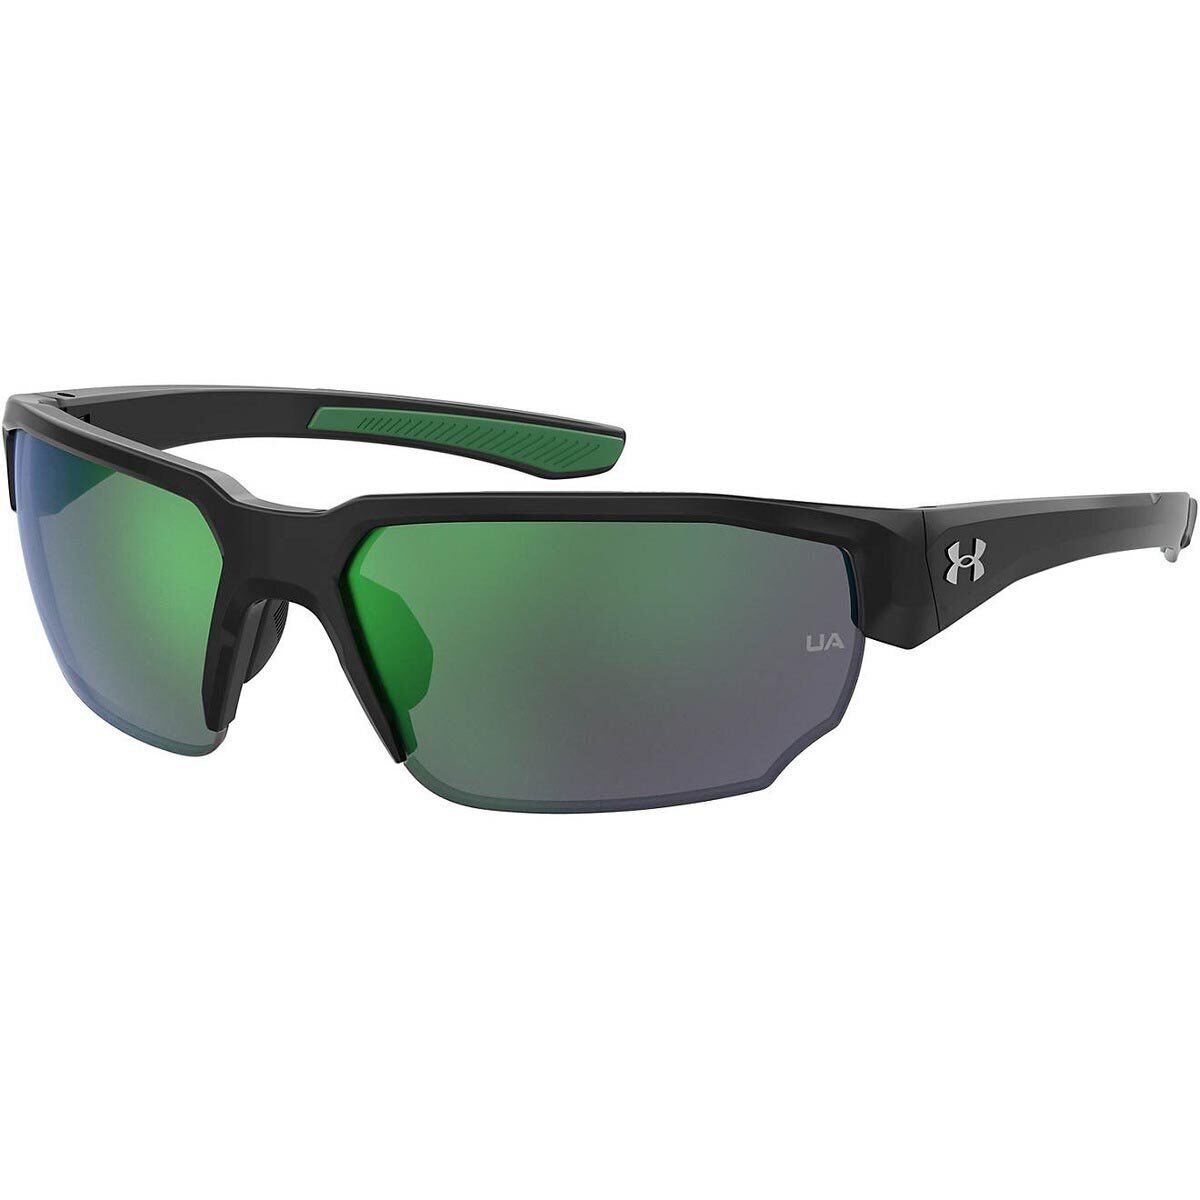 Under Armour Blitzing Sunglasses Black | Green